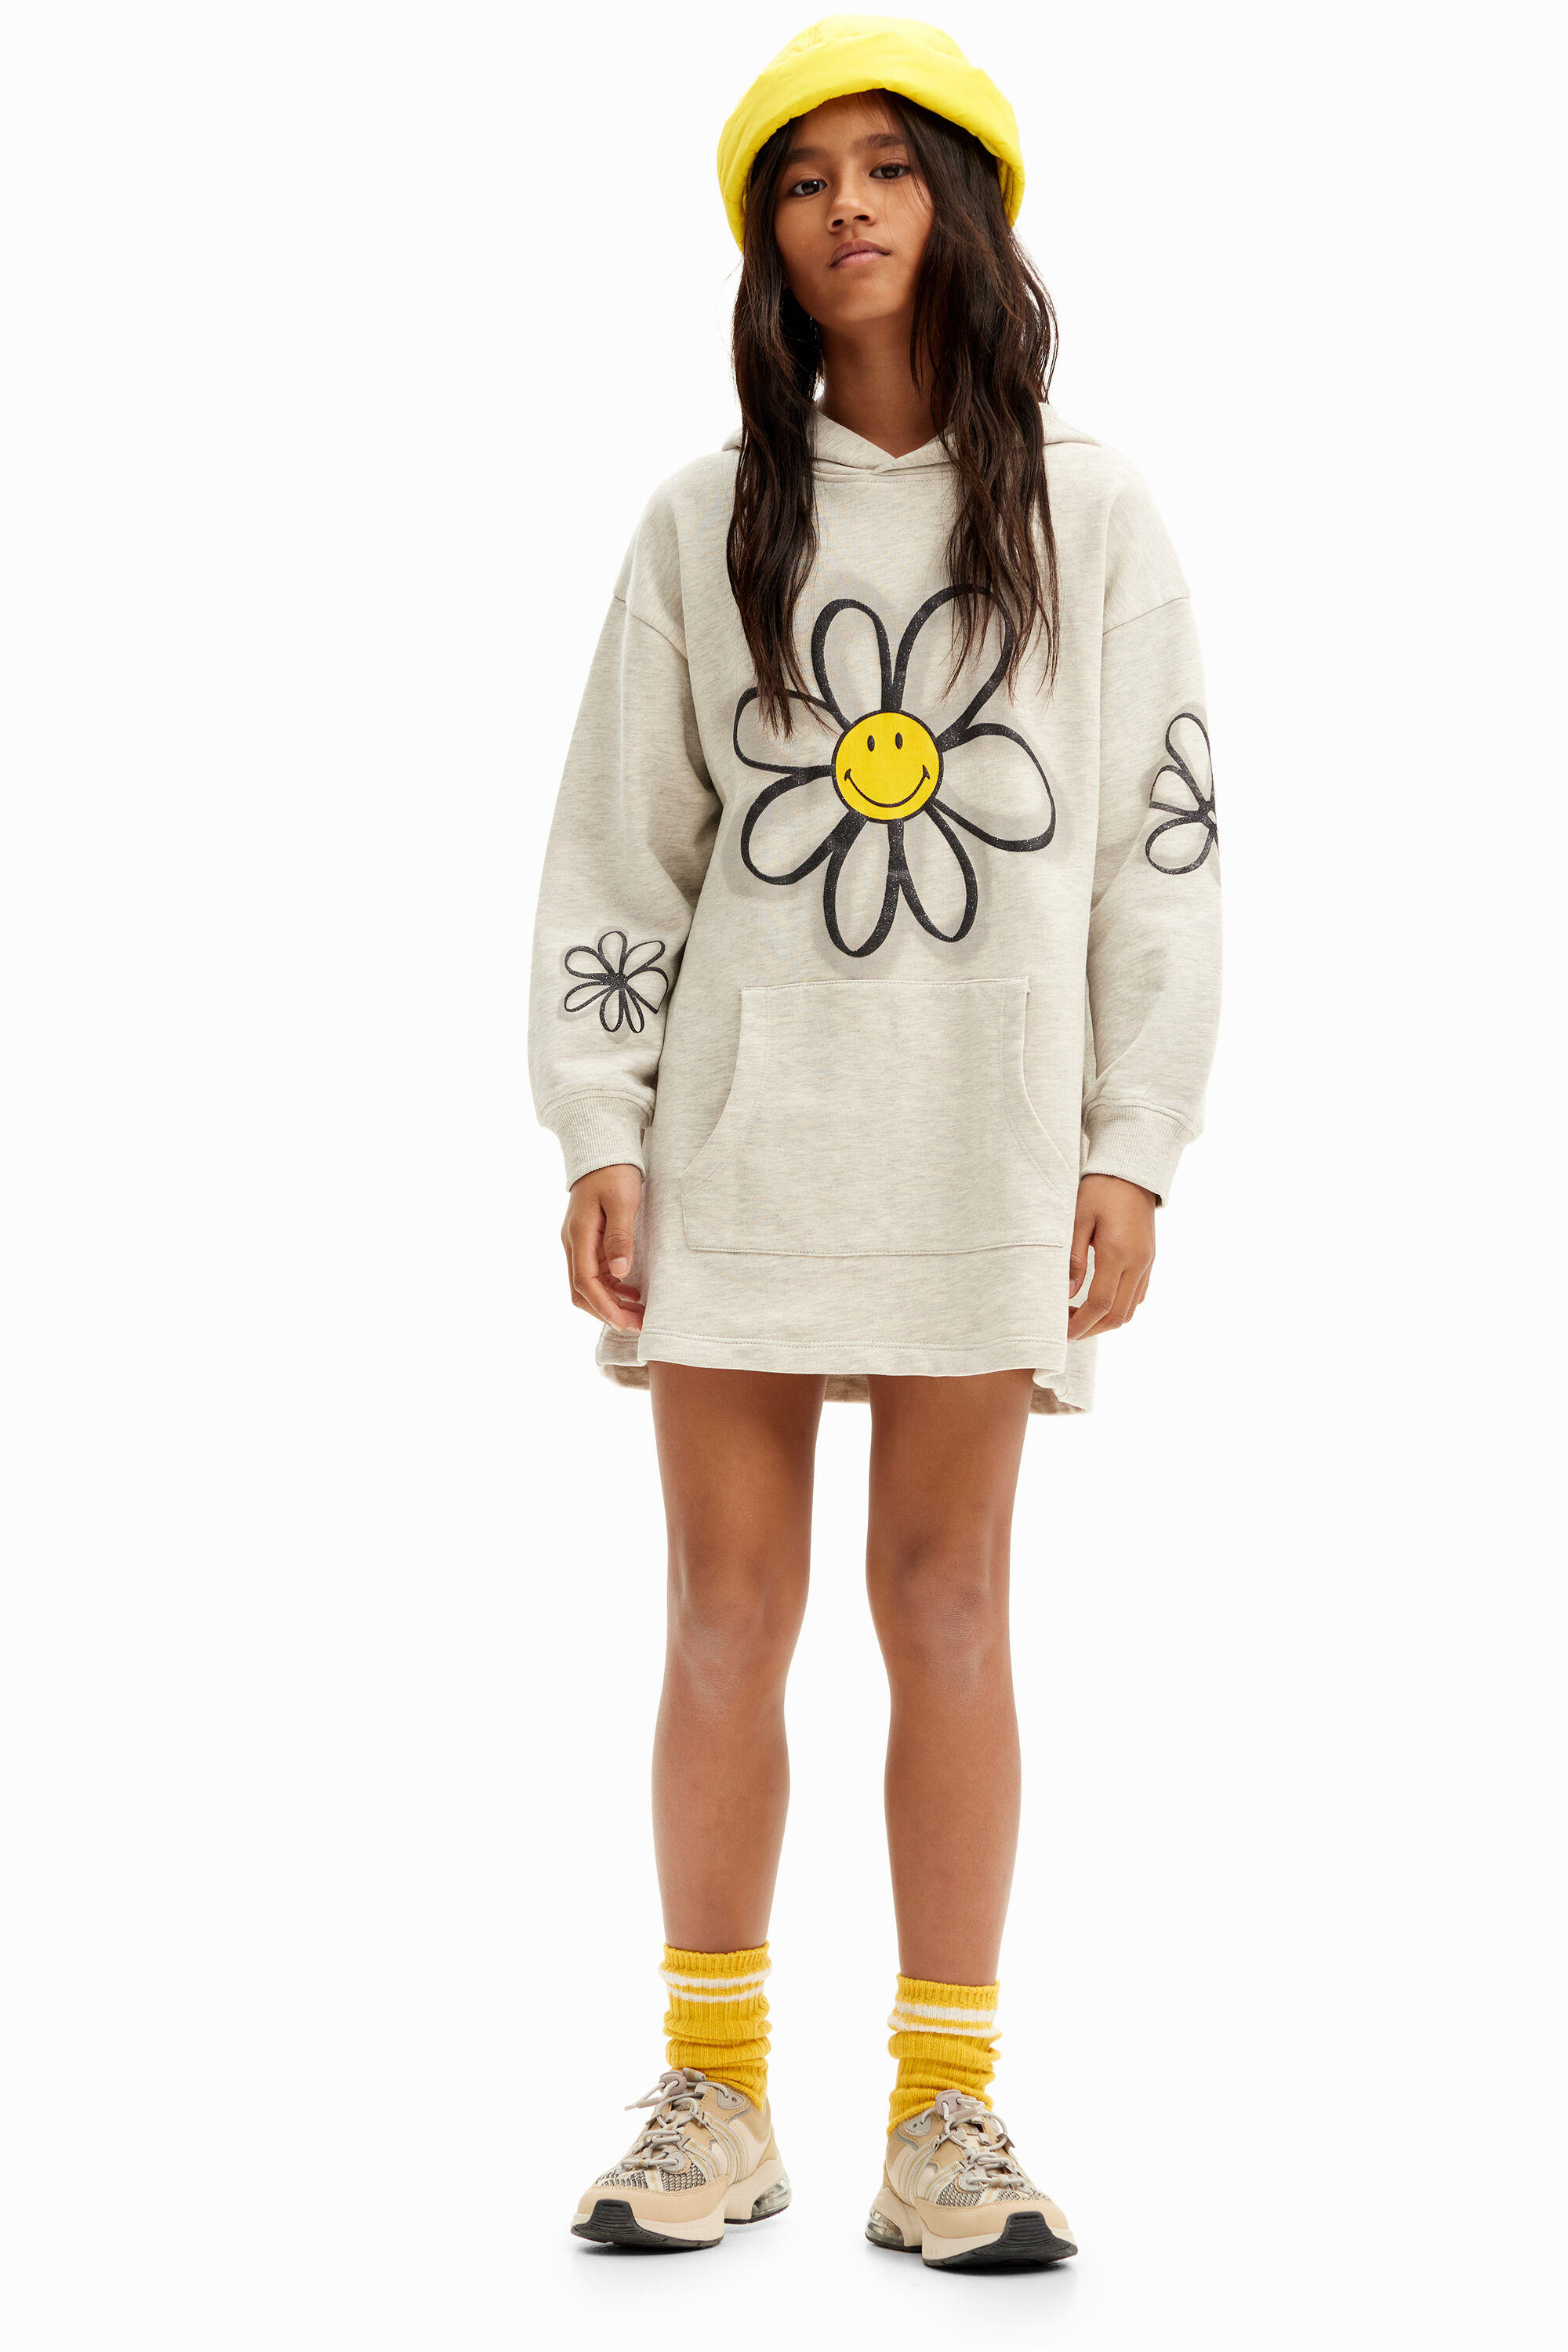 Desigual Smiley Originals ® sweater dress